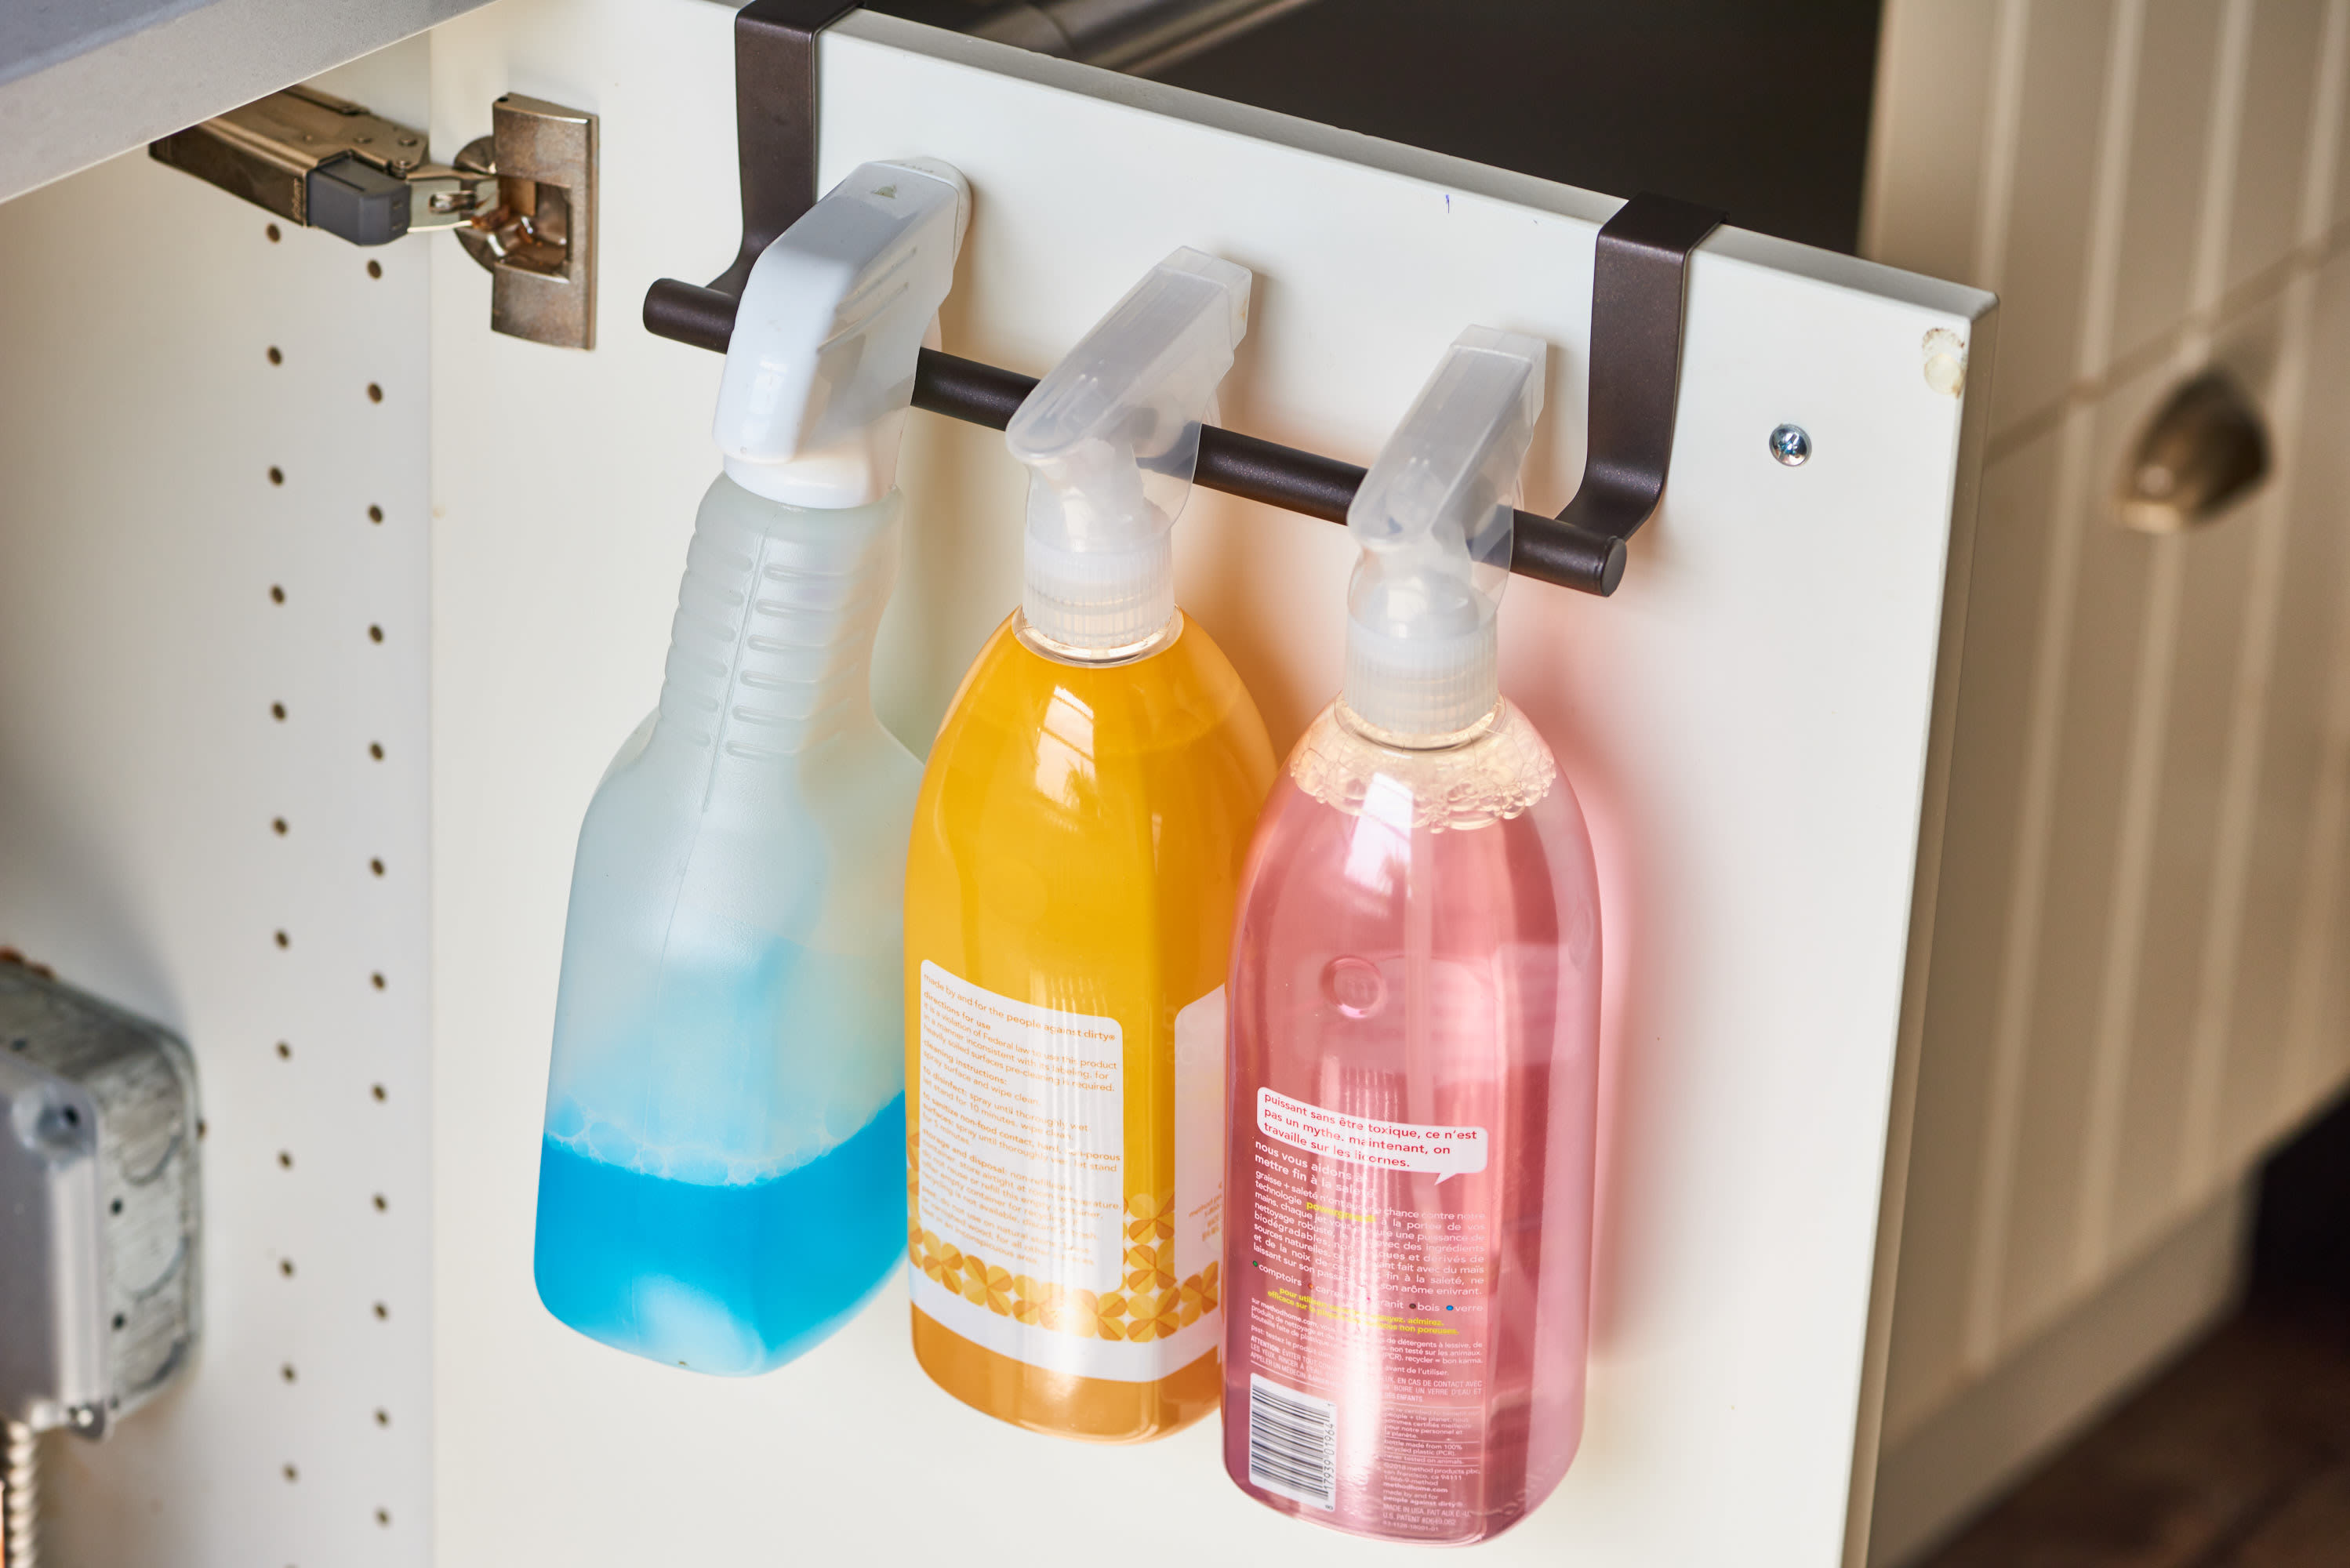 https://cdn.apartmenttherapy.info/image/upload/v1566507329/k/Photo/Lifestyle/2019-09-brilliant-towel-holder-hack-for-spray-bottles/The-Brilliant-Towel-Holder-Hack-for-Spray-Bottles_028.jpg